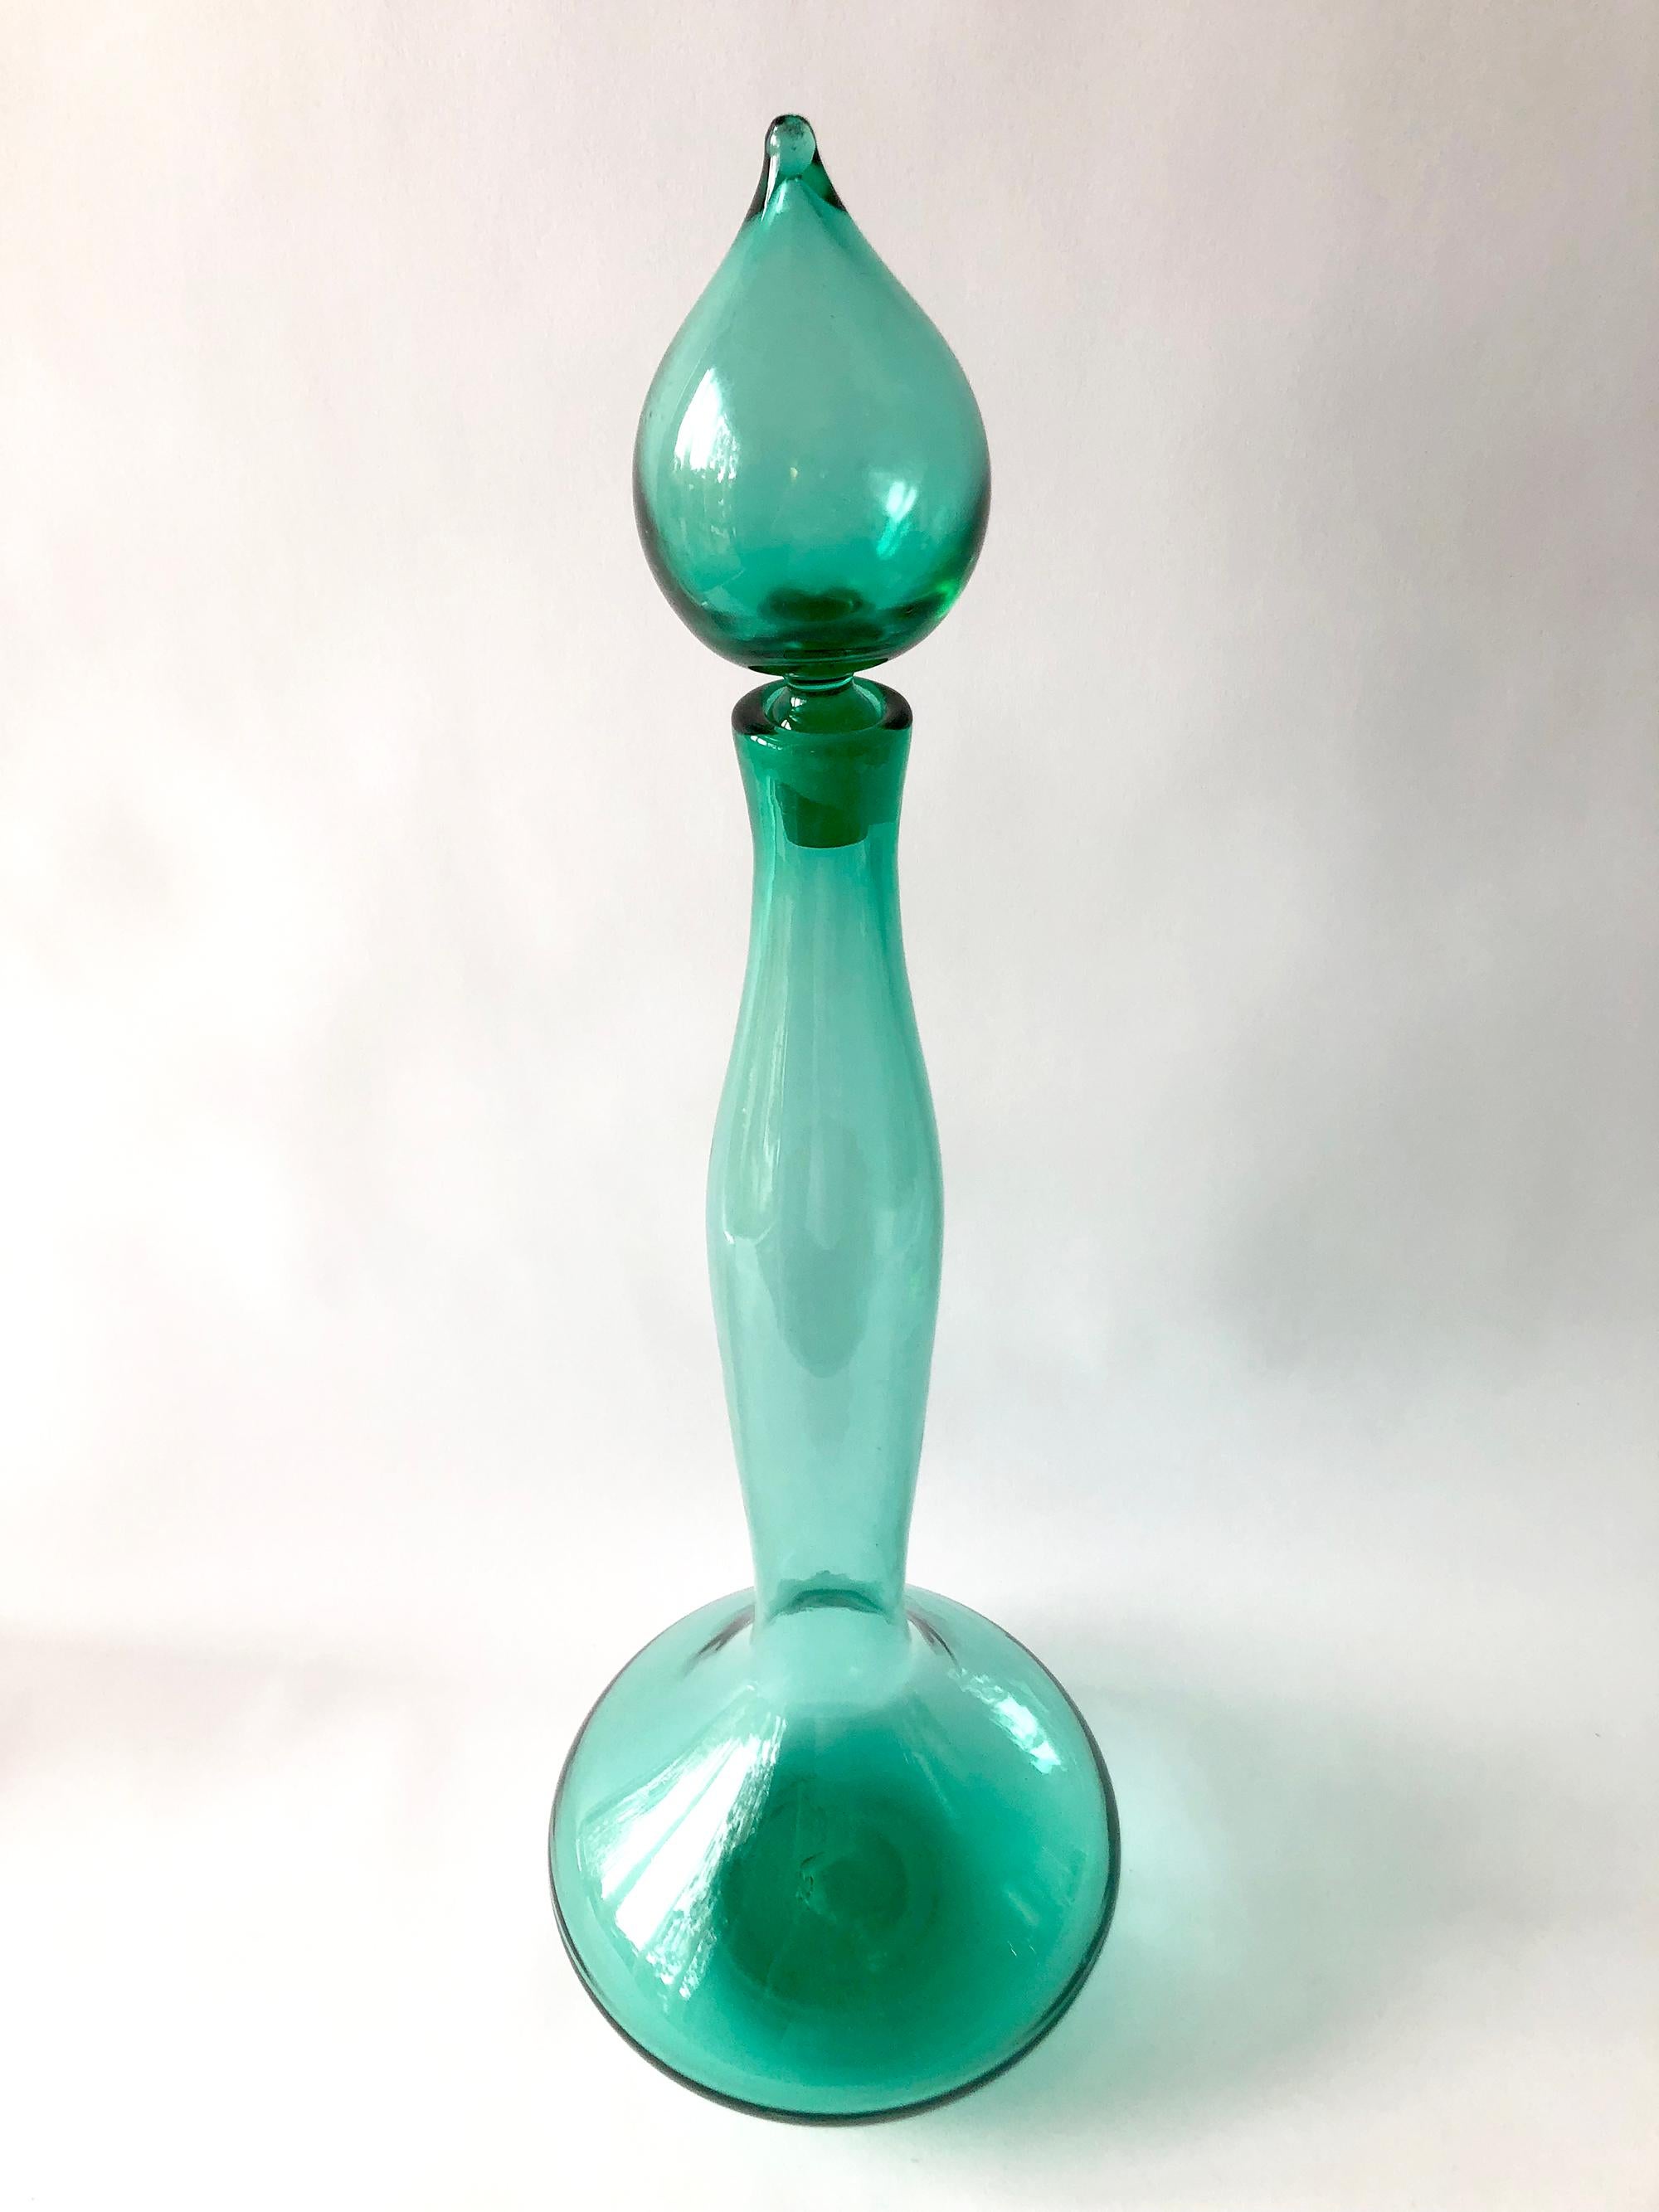 Sea foam green 5815L Genie bottle decanter designed in 1958 by Wayne Husted for Blenko. Decanter measures 25